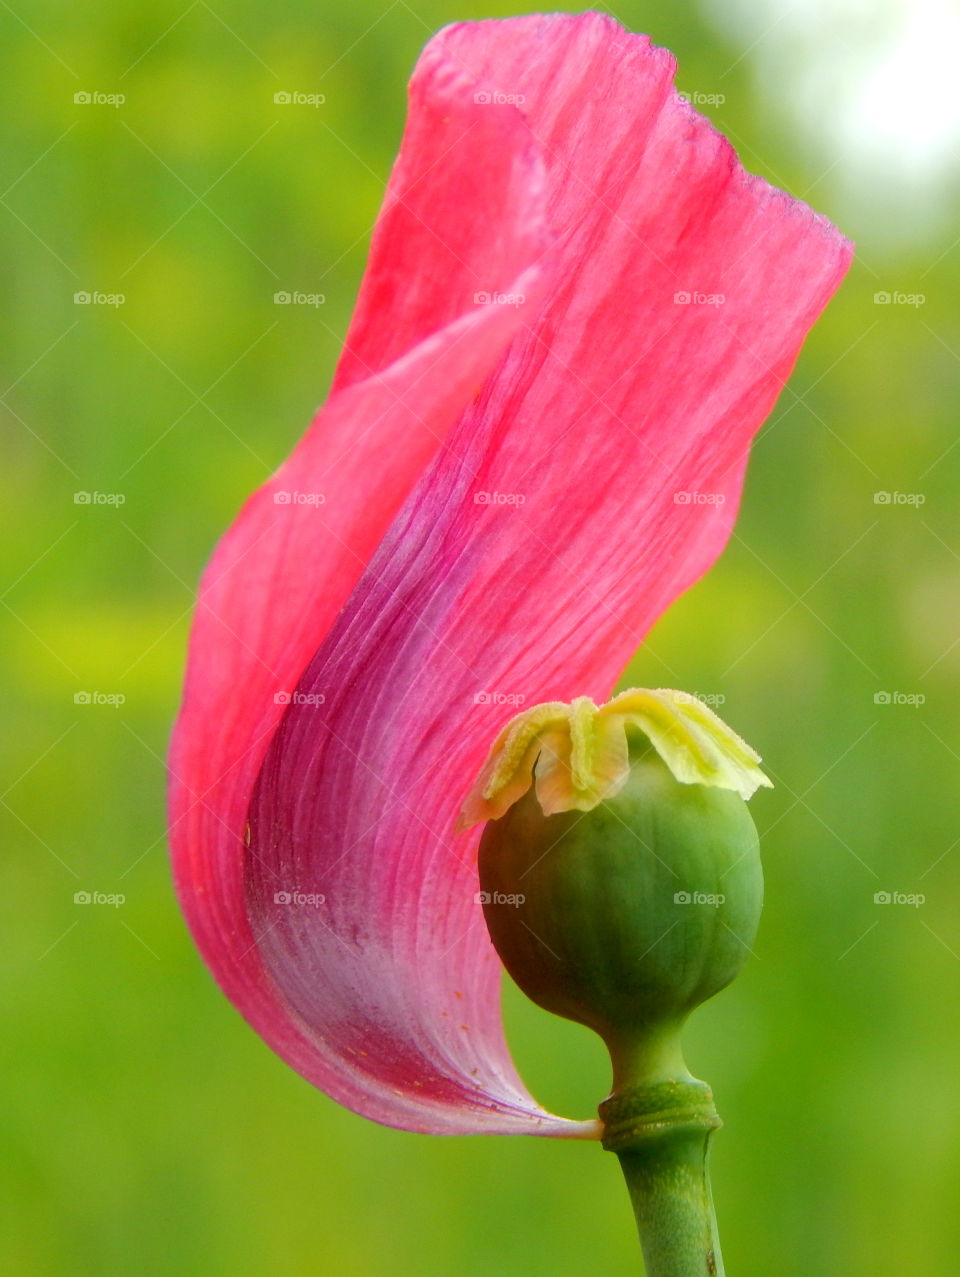 One pink petal